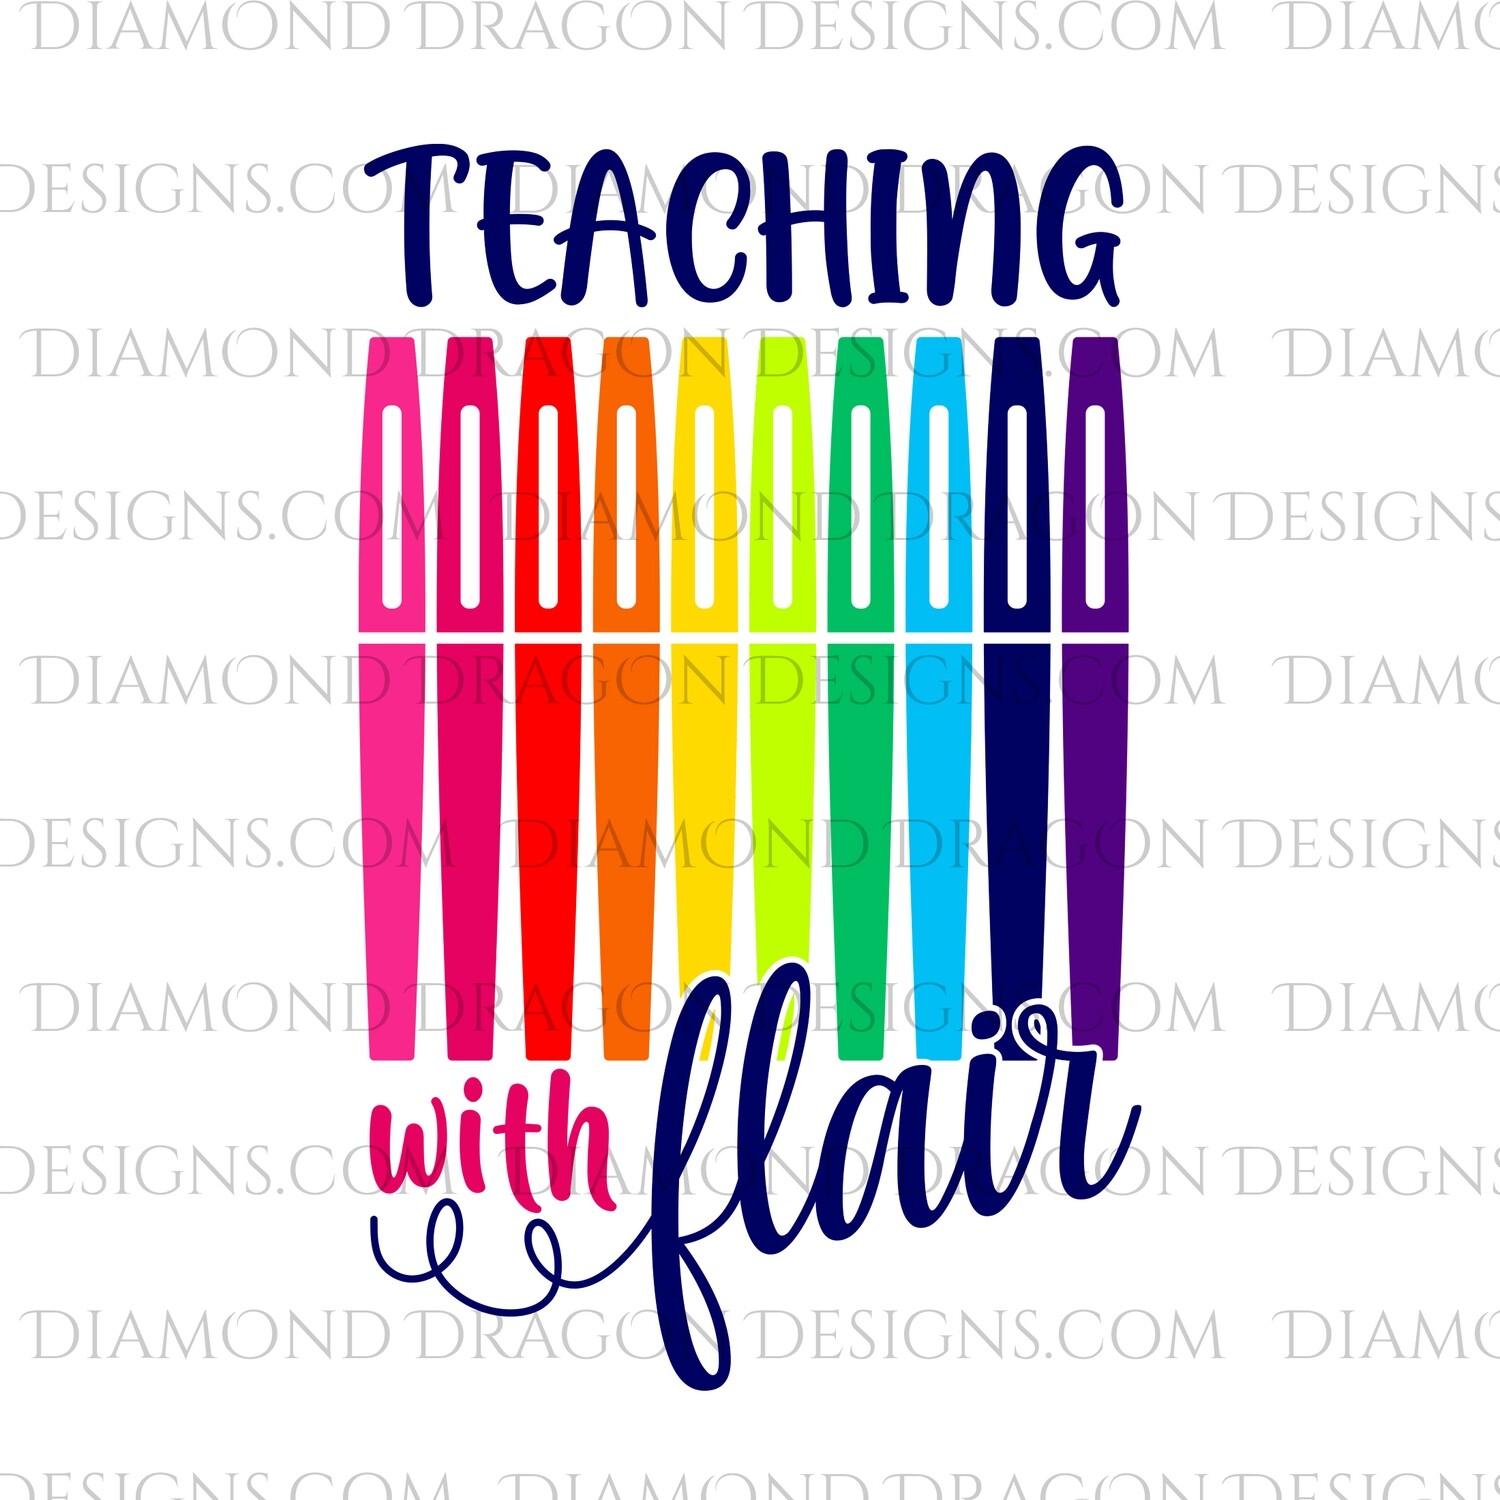 Teachers - Flair Pens, Teaching with Flair, Waterslide